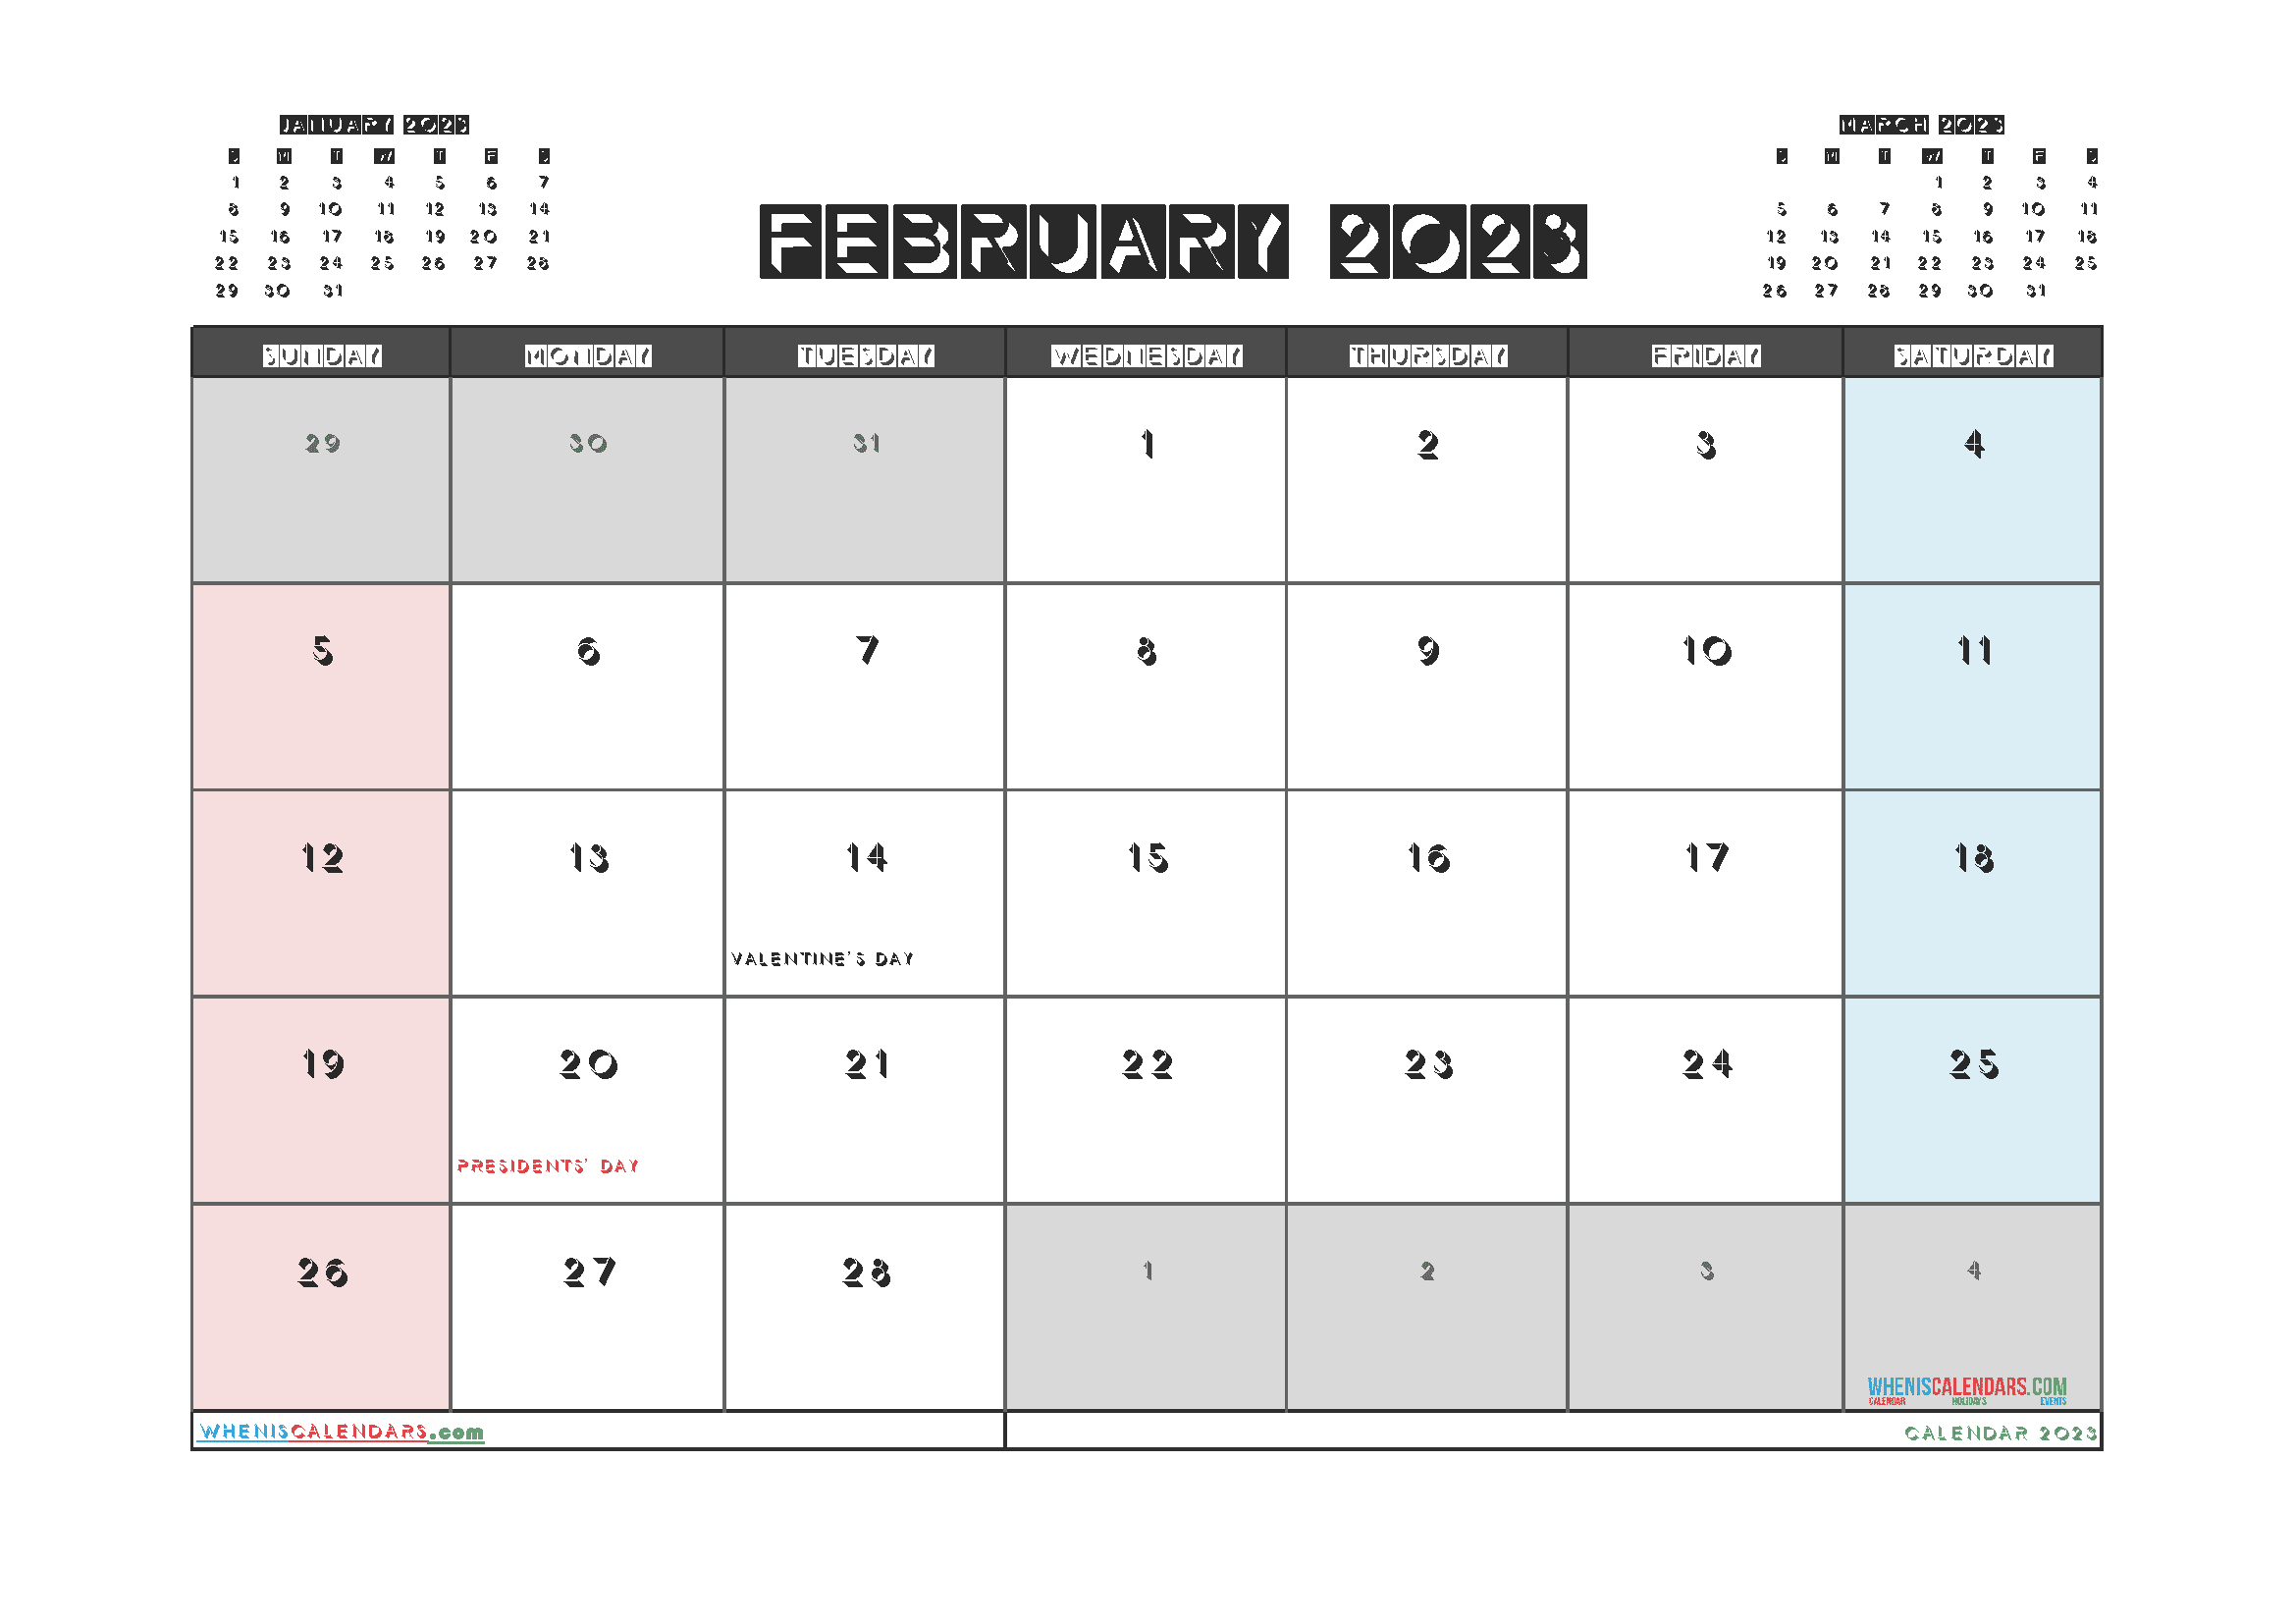 February 2023 Calendar with Holidays Free